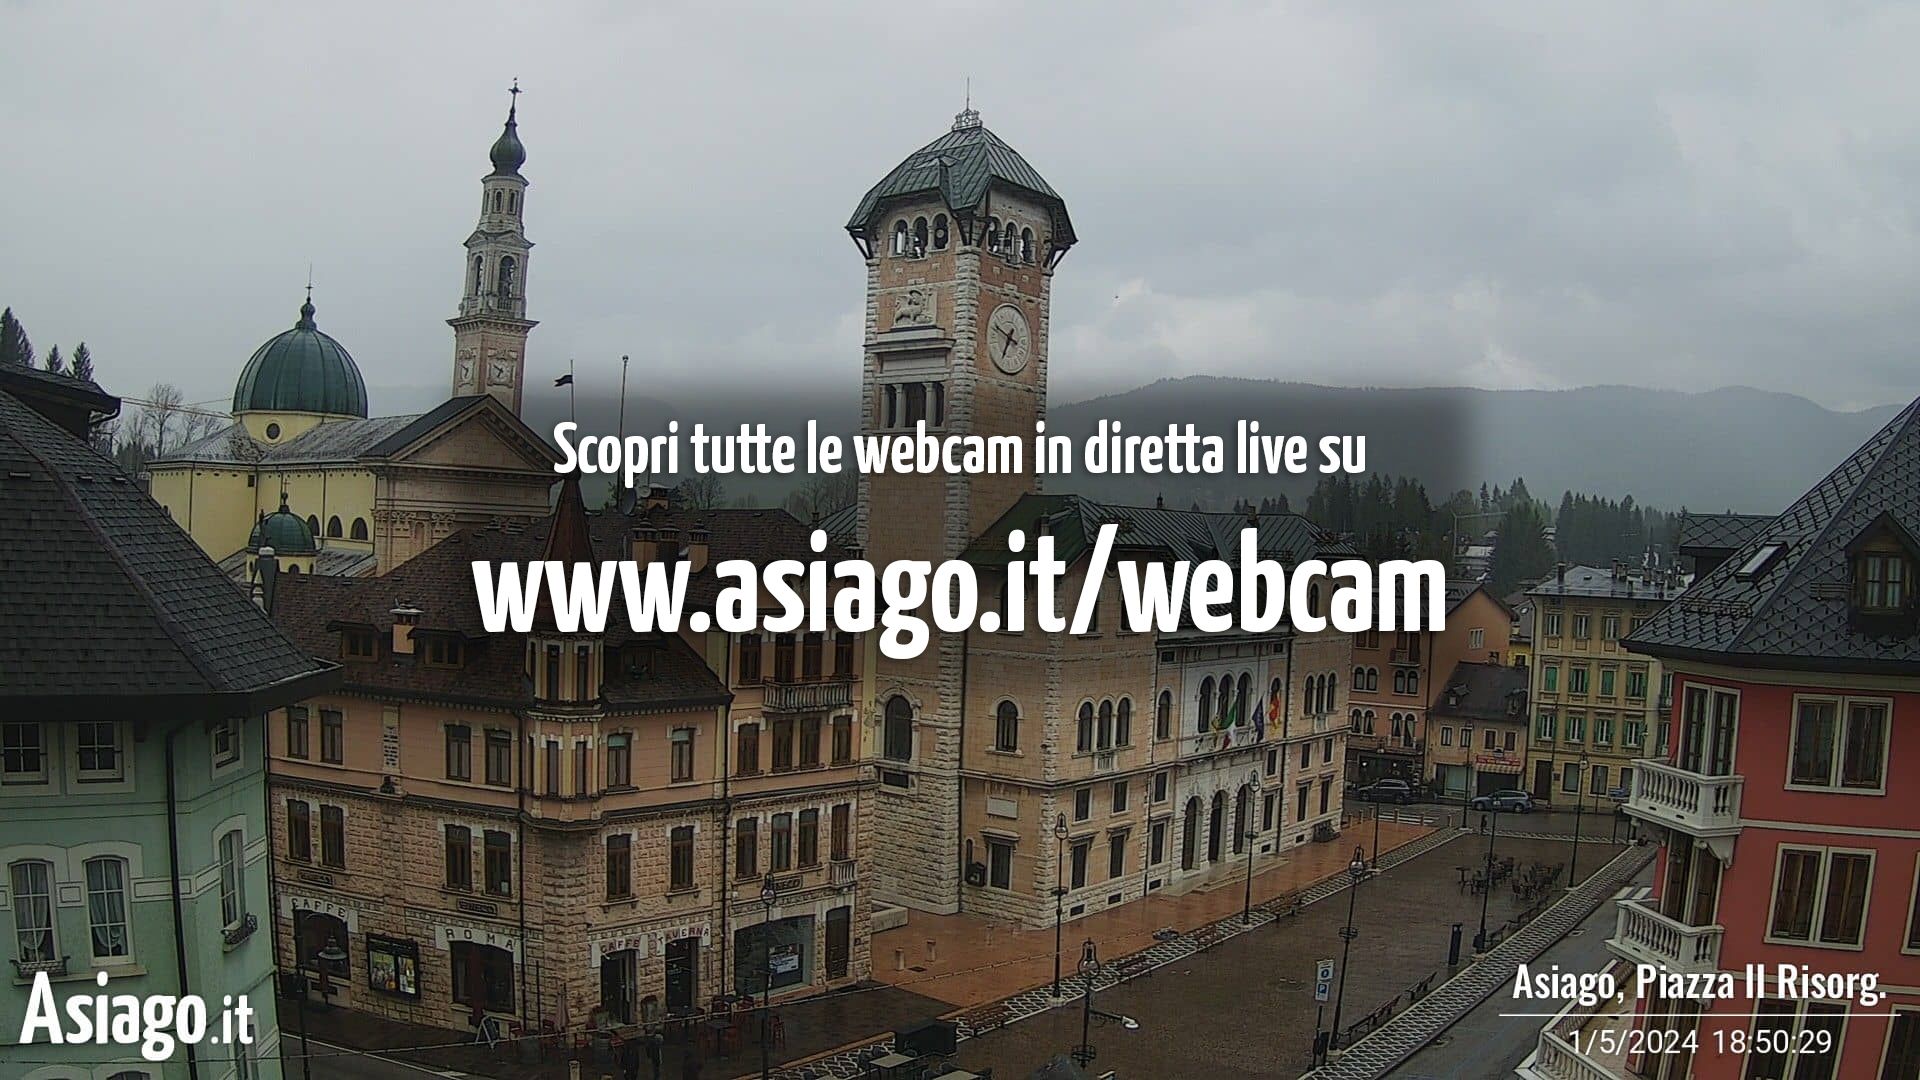 Webcam Asiago, Piazza II Risorgimento - Asiago.it